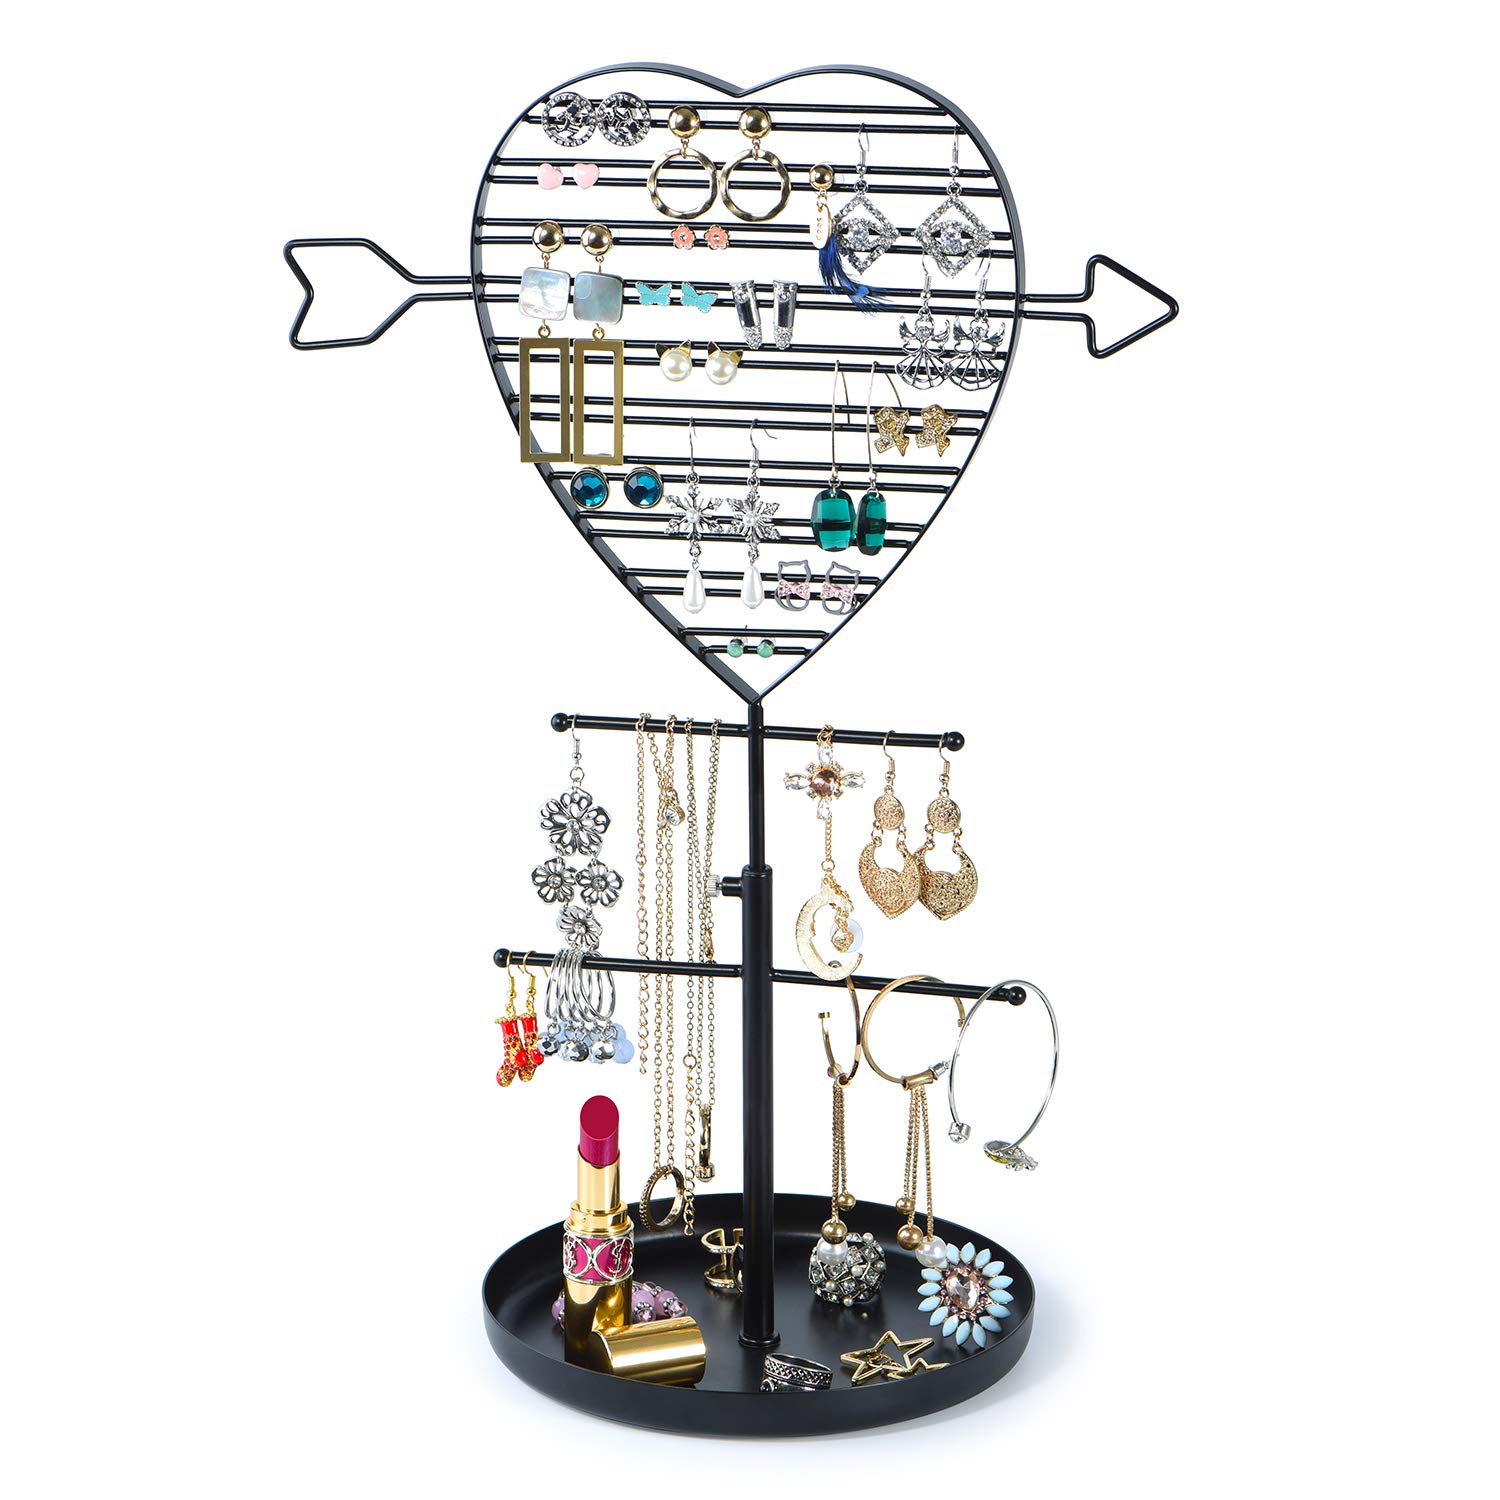 SRIWATANA Jewelry Holder Organizer, Earring Holder Tree, Metal Earring Organizer with Cupid's Arrow Design(Black)